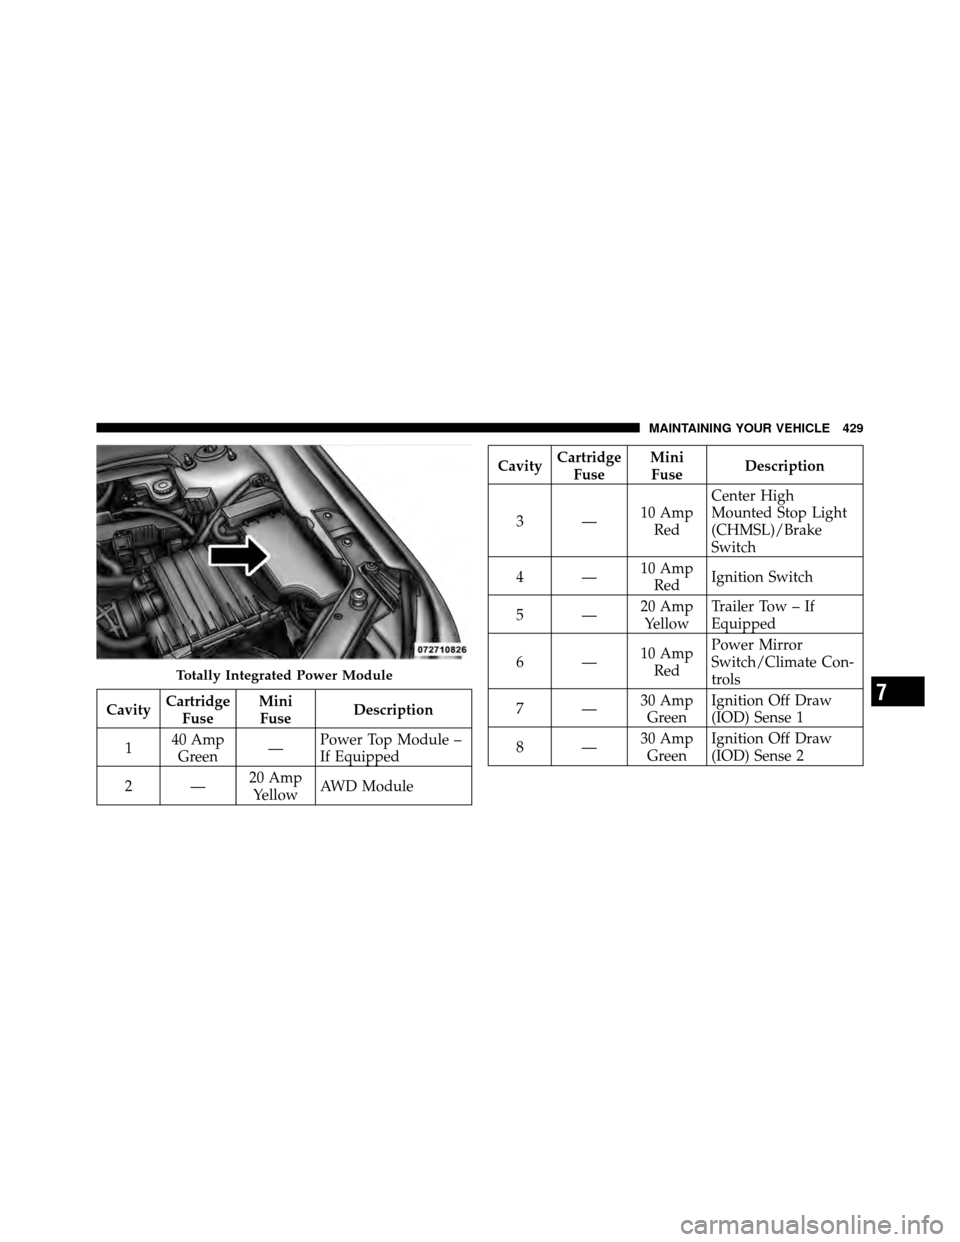 CHRYSLER 200 2011 1.G User Guide CavityCartridge
Fuse Mini
Fuse Description
1 40 Amp
Green —Power Top Module –
If Equipped
2— 20 Amp
Yellow AWD Module
CavityCartridge
Fuse Mini
Fuse Description
3— 10 Amp
Red Center High
Mount